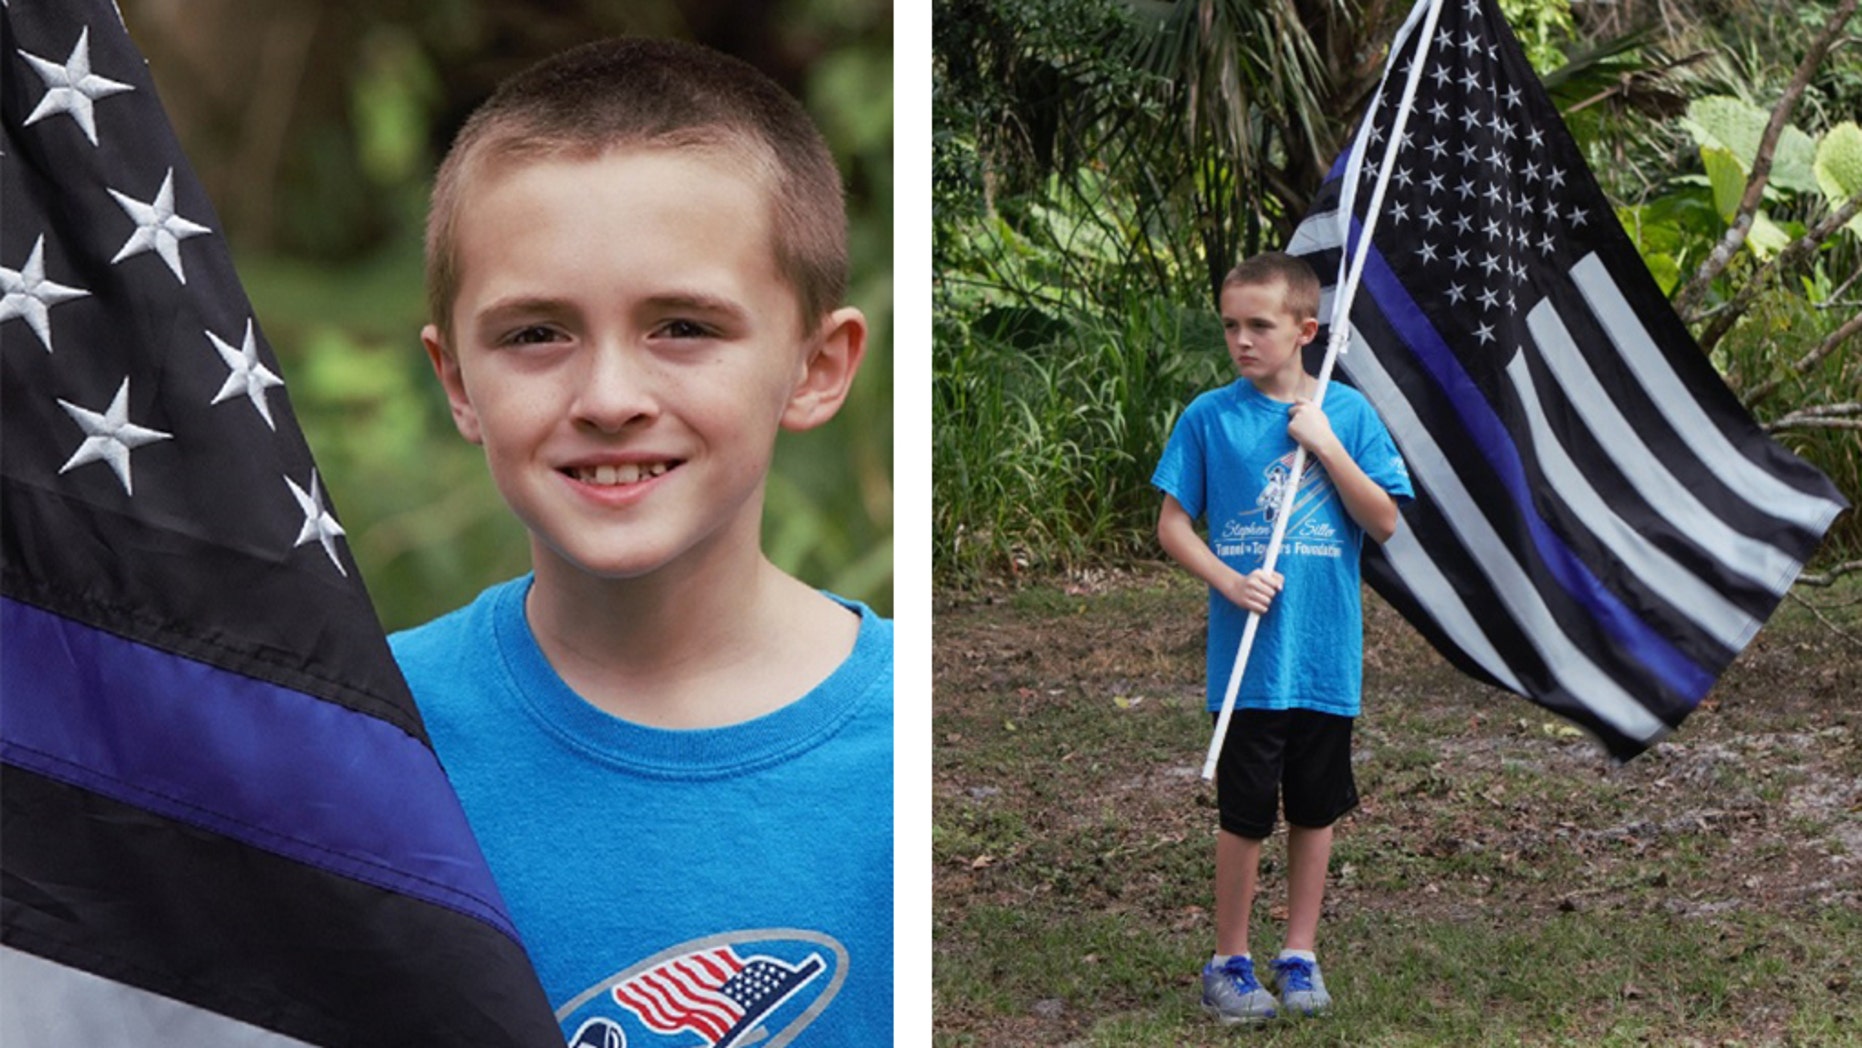 Florida boy, 10, honors fallen law enforcement by running: report